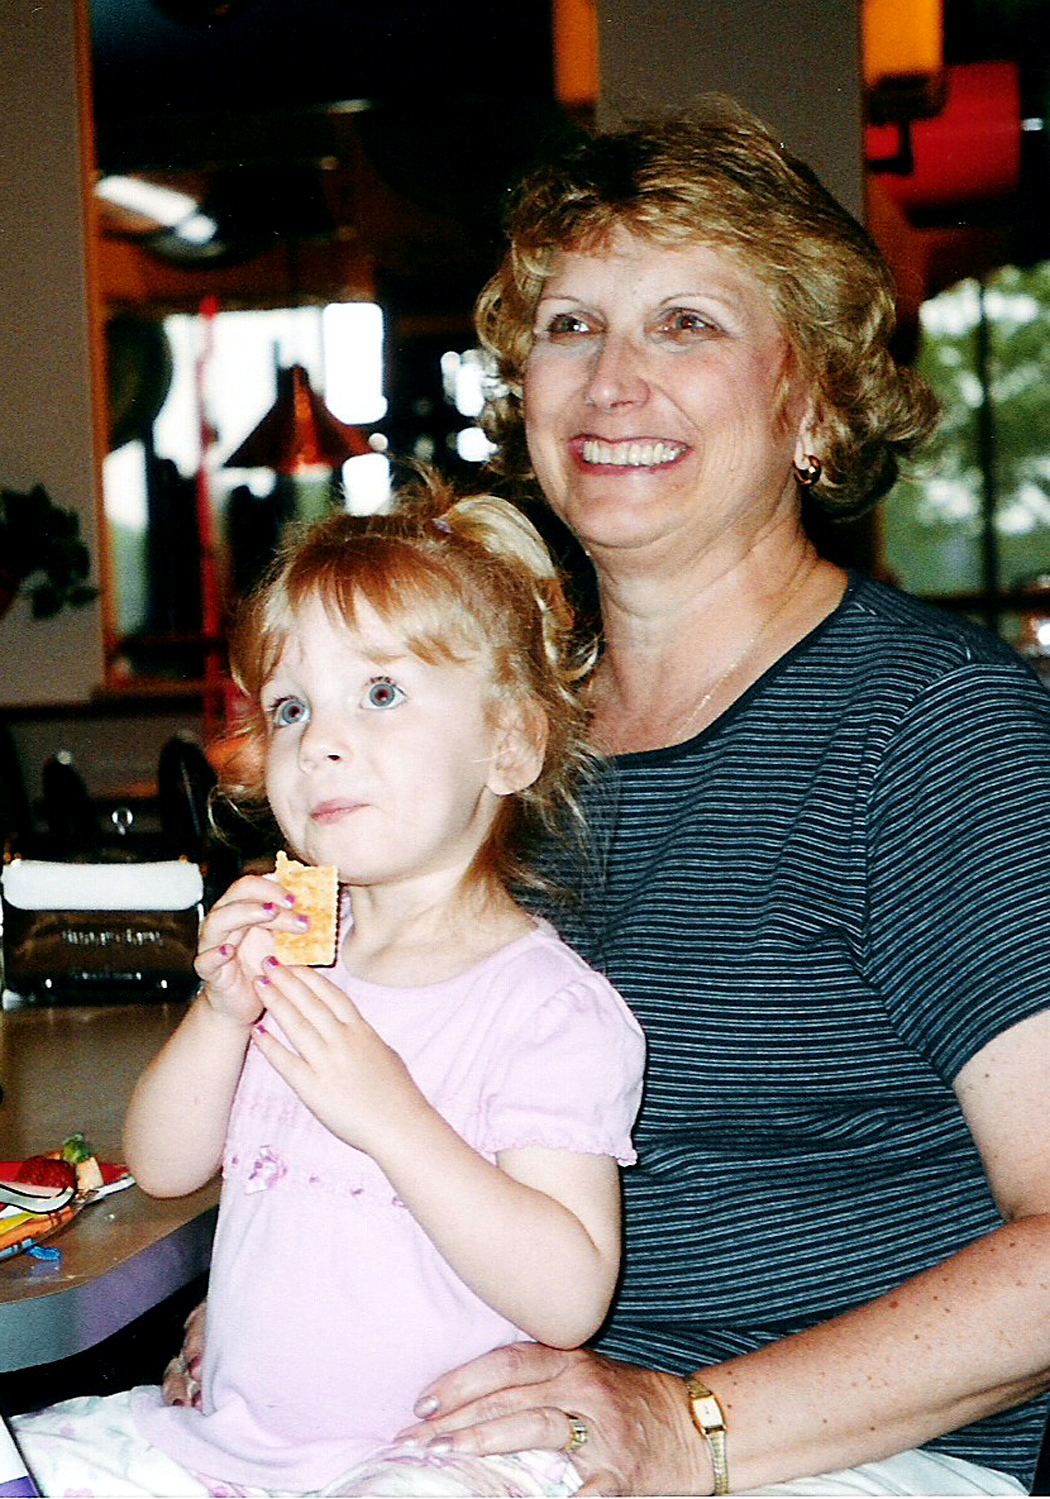 Photo of Sophia Lane Morton with her Grandma Lynda Plymate, May 2004